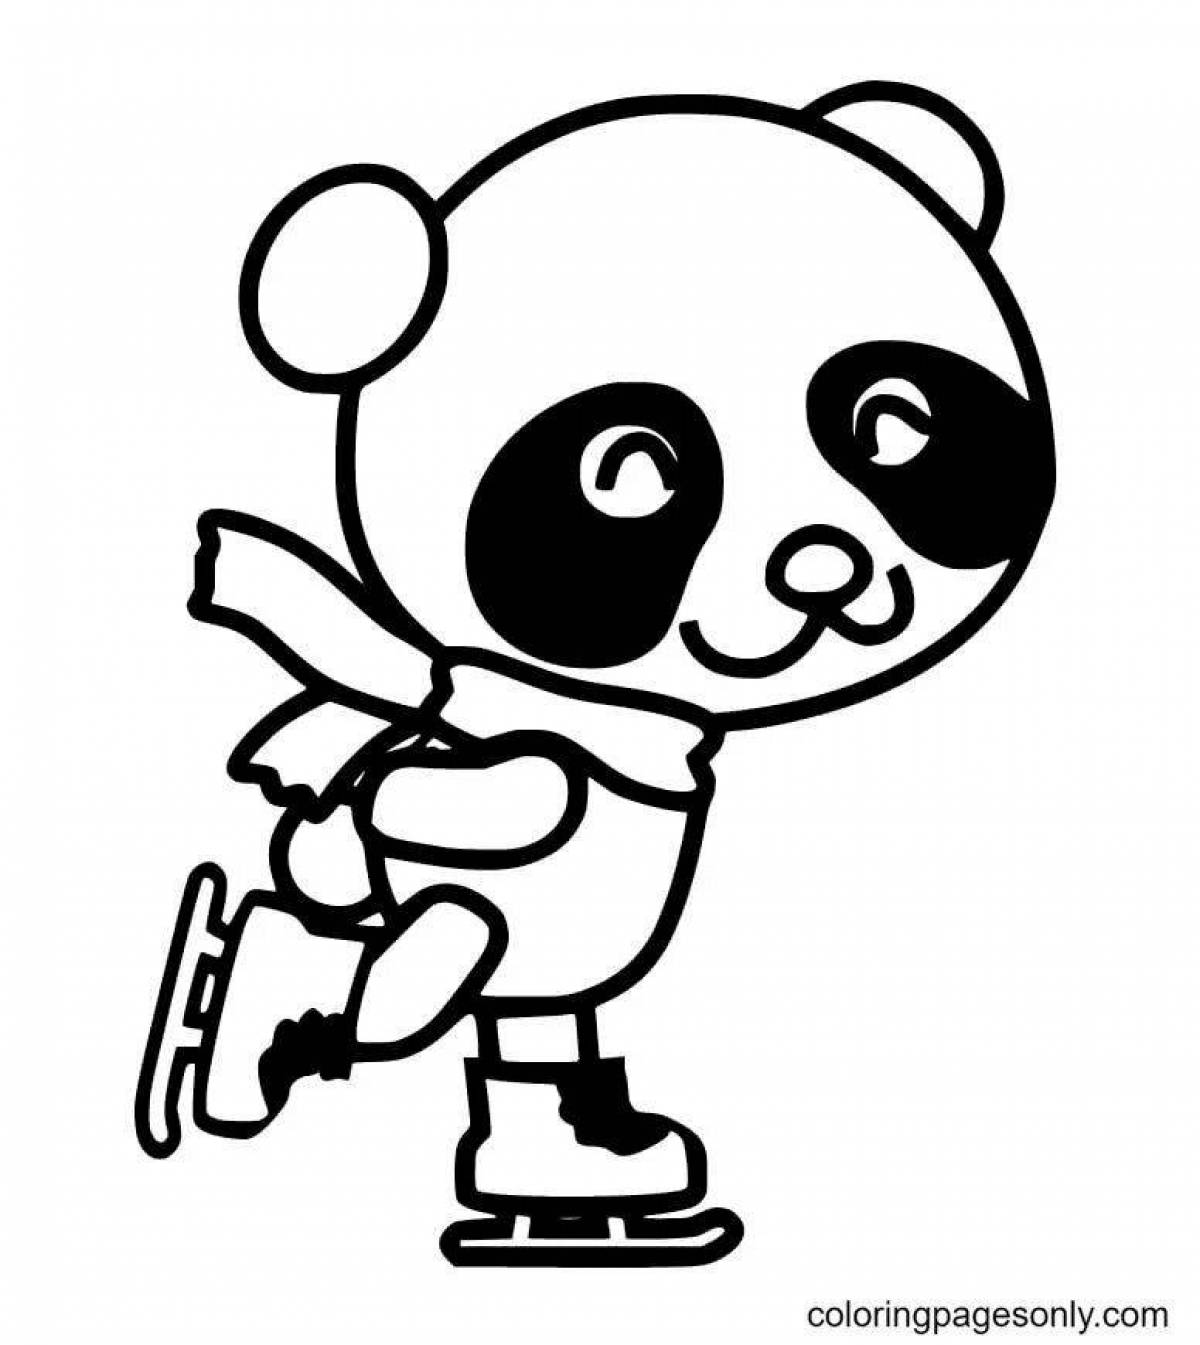 Crazy panda coloring book for kids